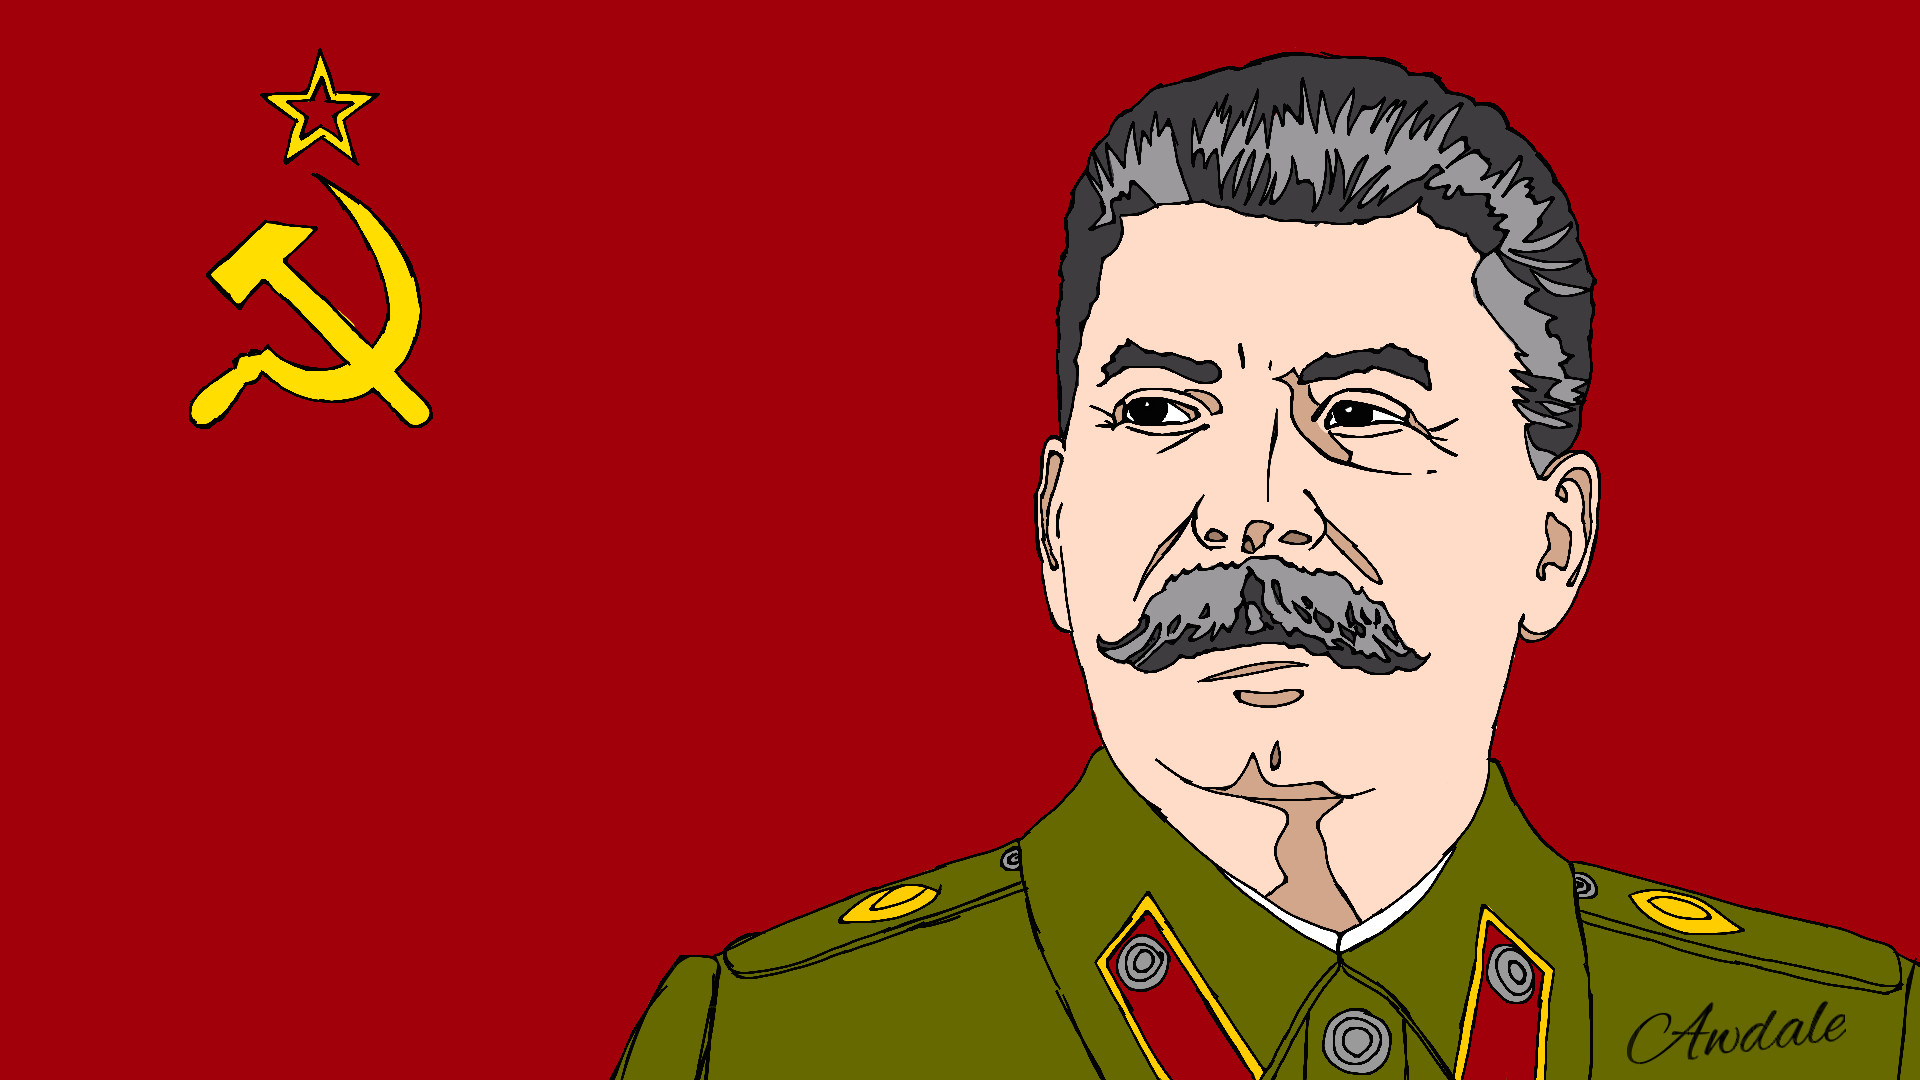 General 1920x1080 Joseph Stalin USSR men political figure face simple background digital art signature red background uniform moustache